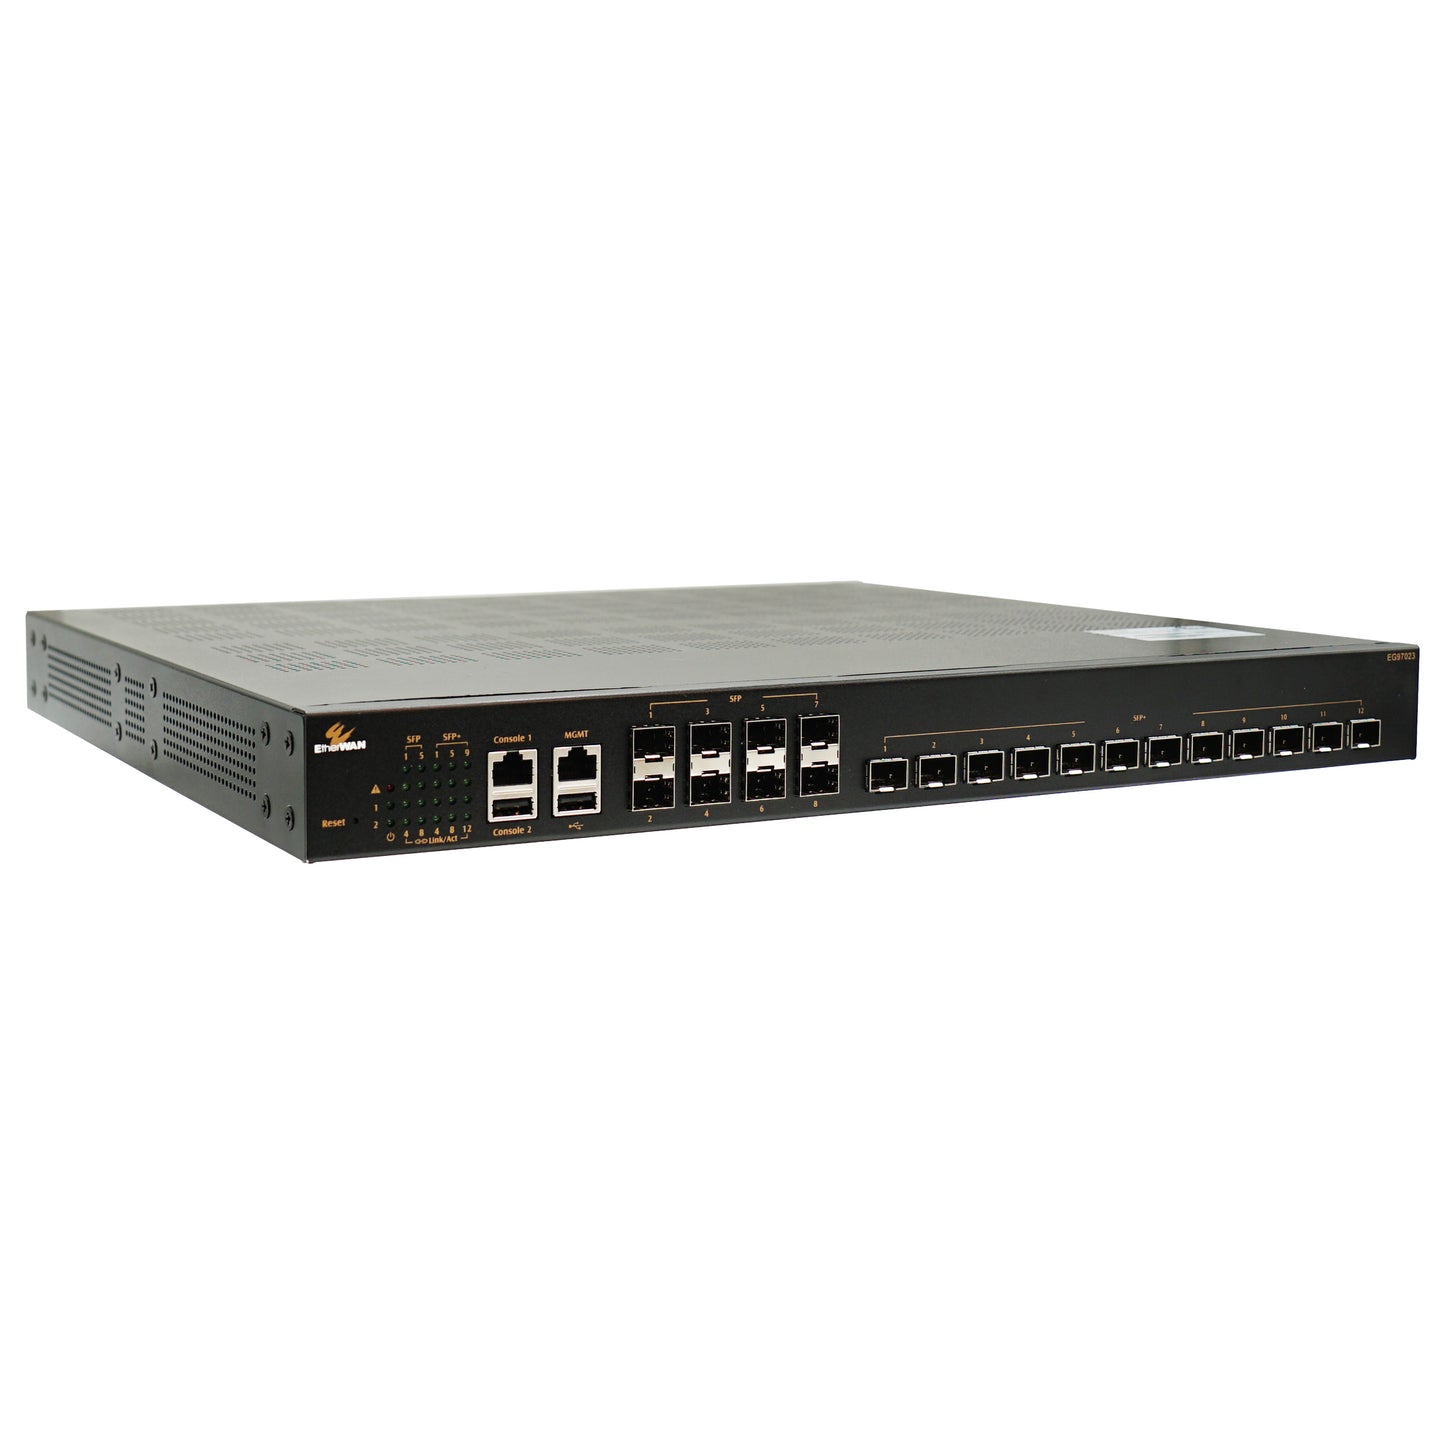 EG97023-2VCR - Hardened Managed Layer-3 Gigabit Ethernet Switch 20-port (8-port GE SFP & 12-port 1G/10G SFP+)